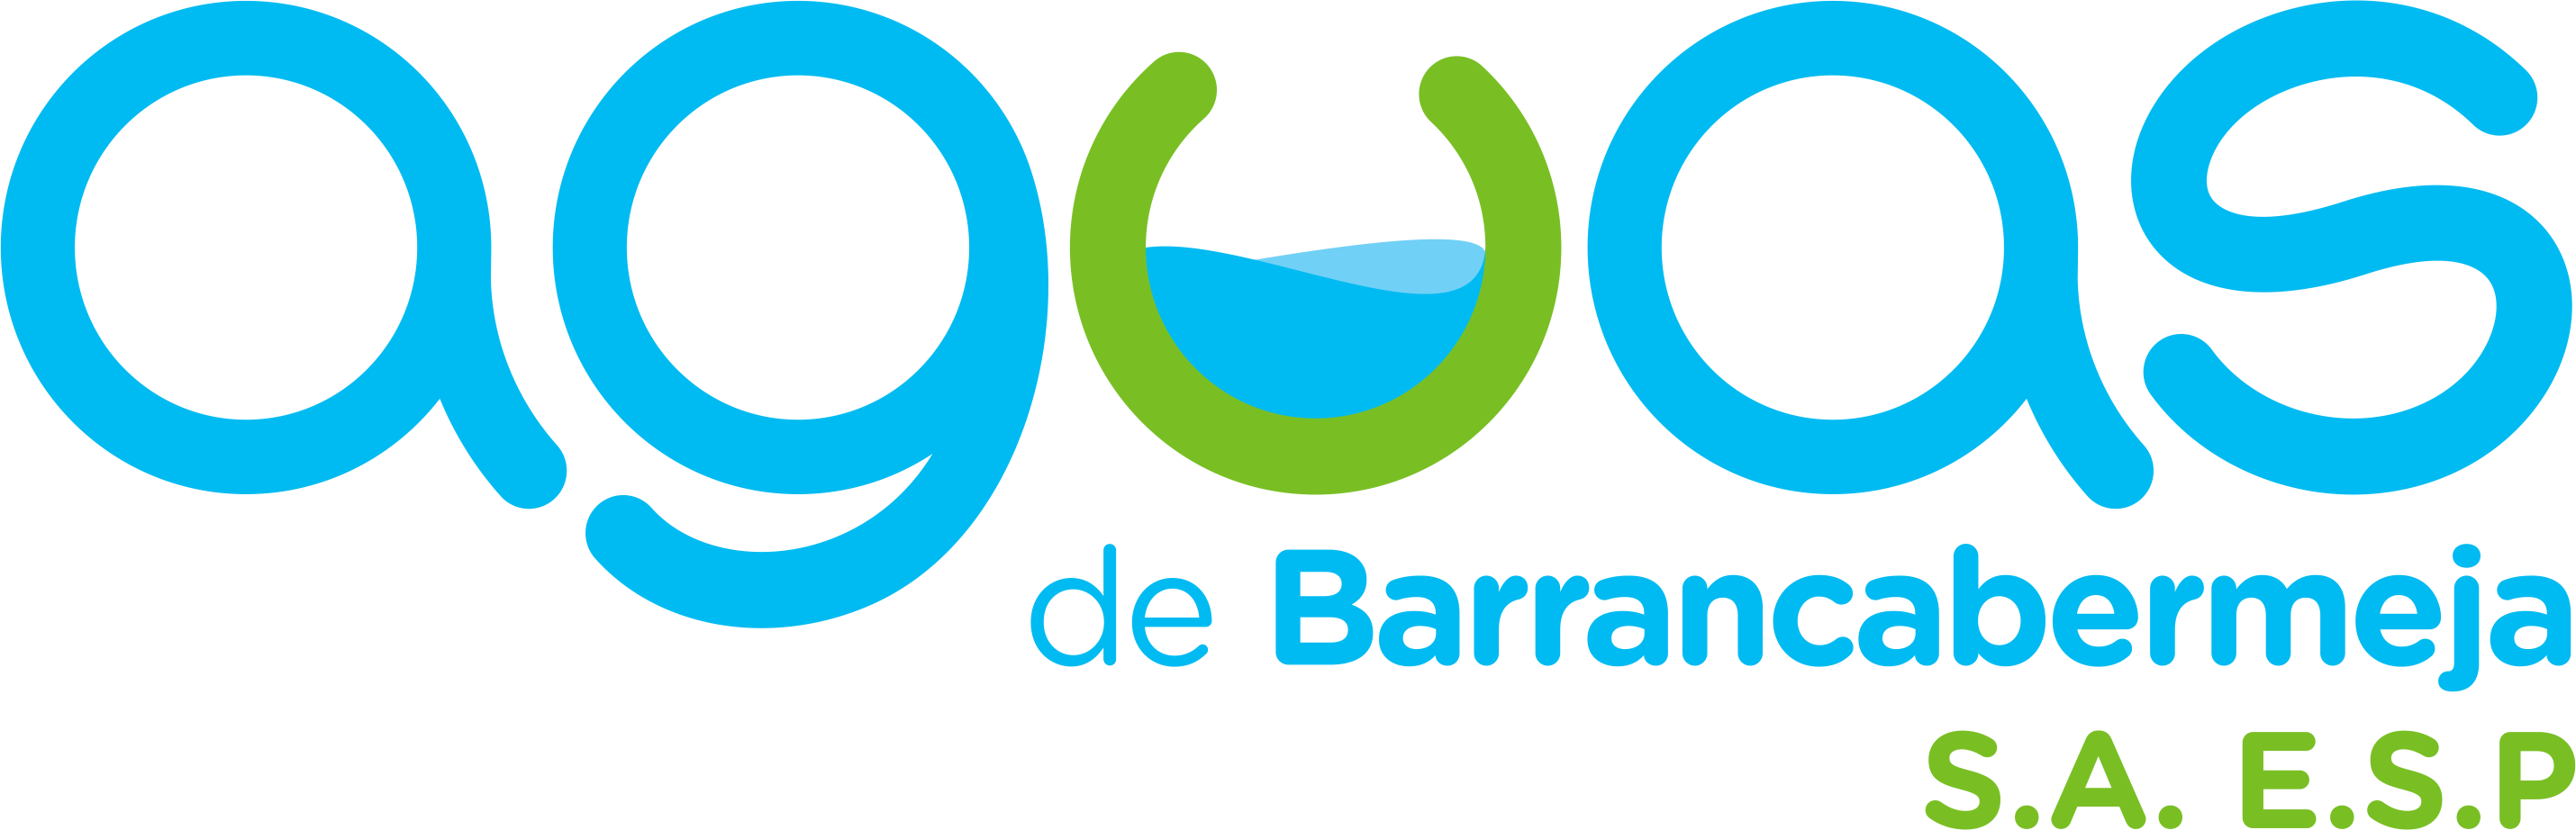 Aguas de Barrancabermeja